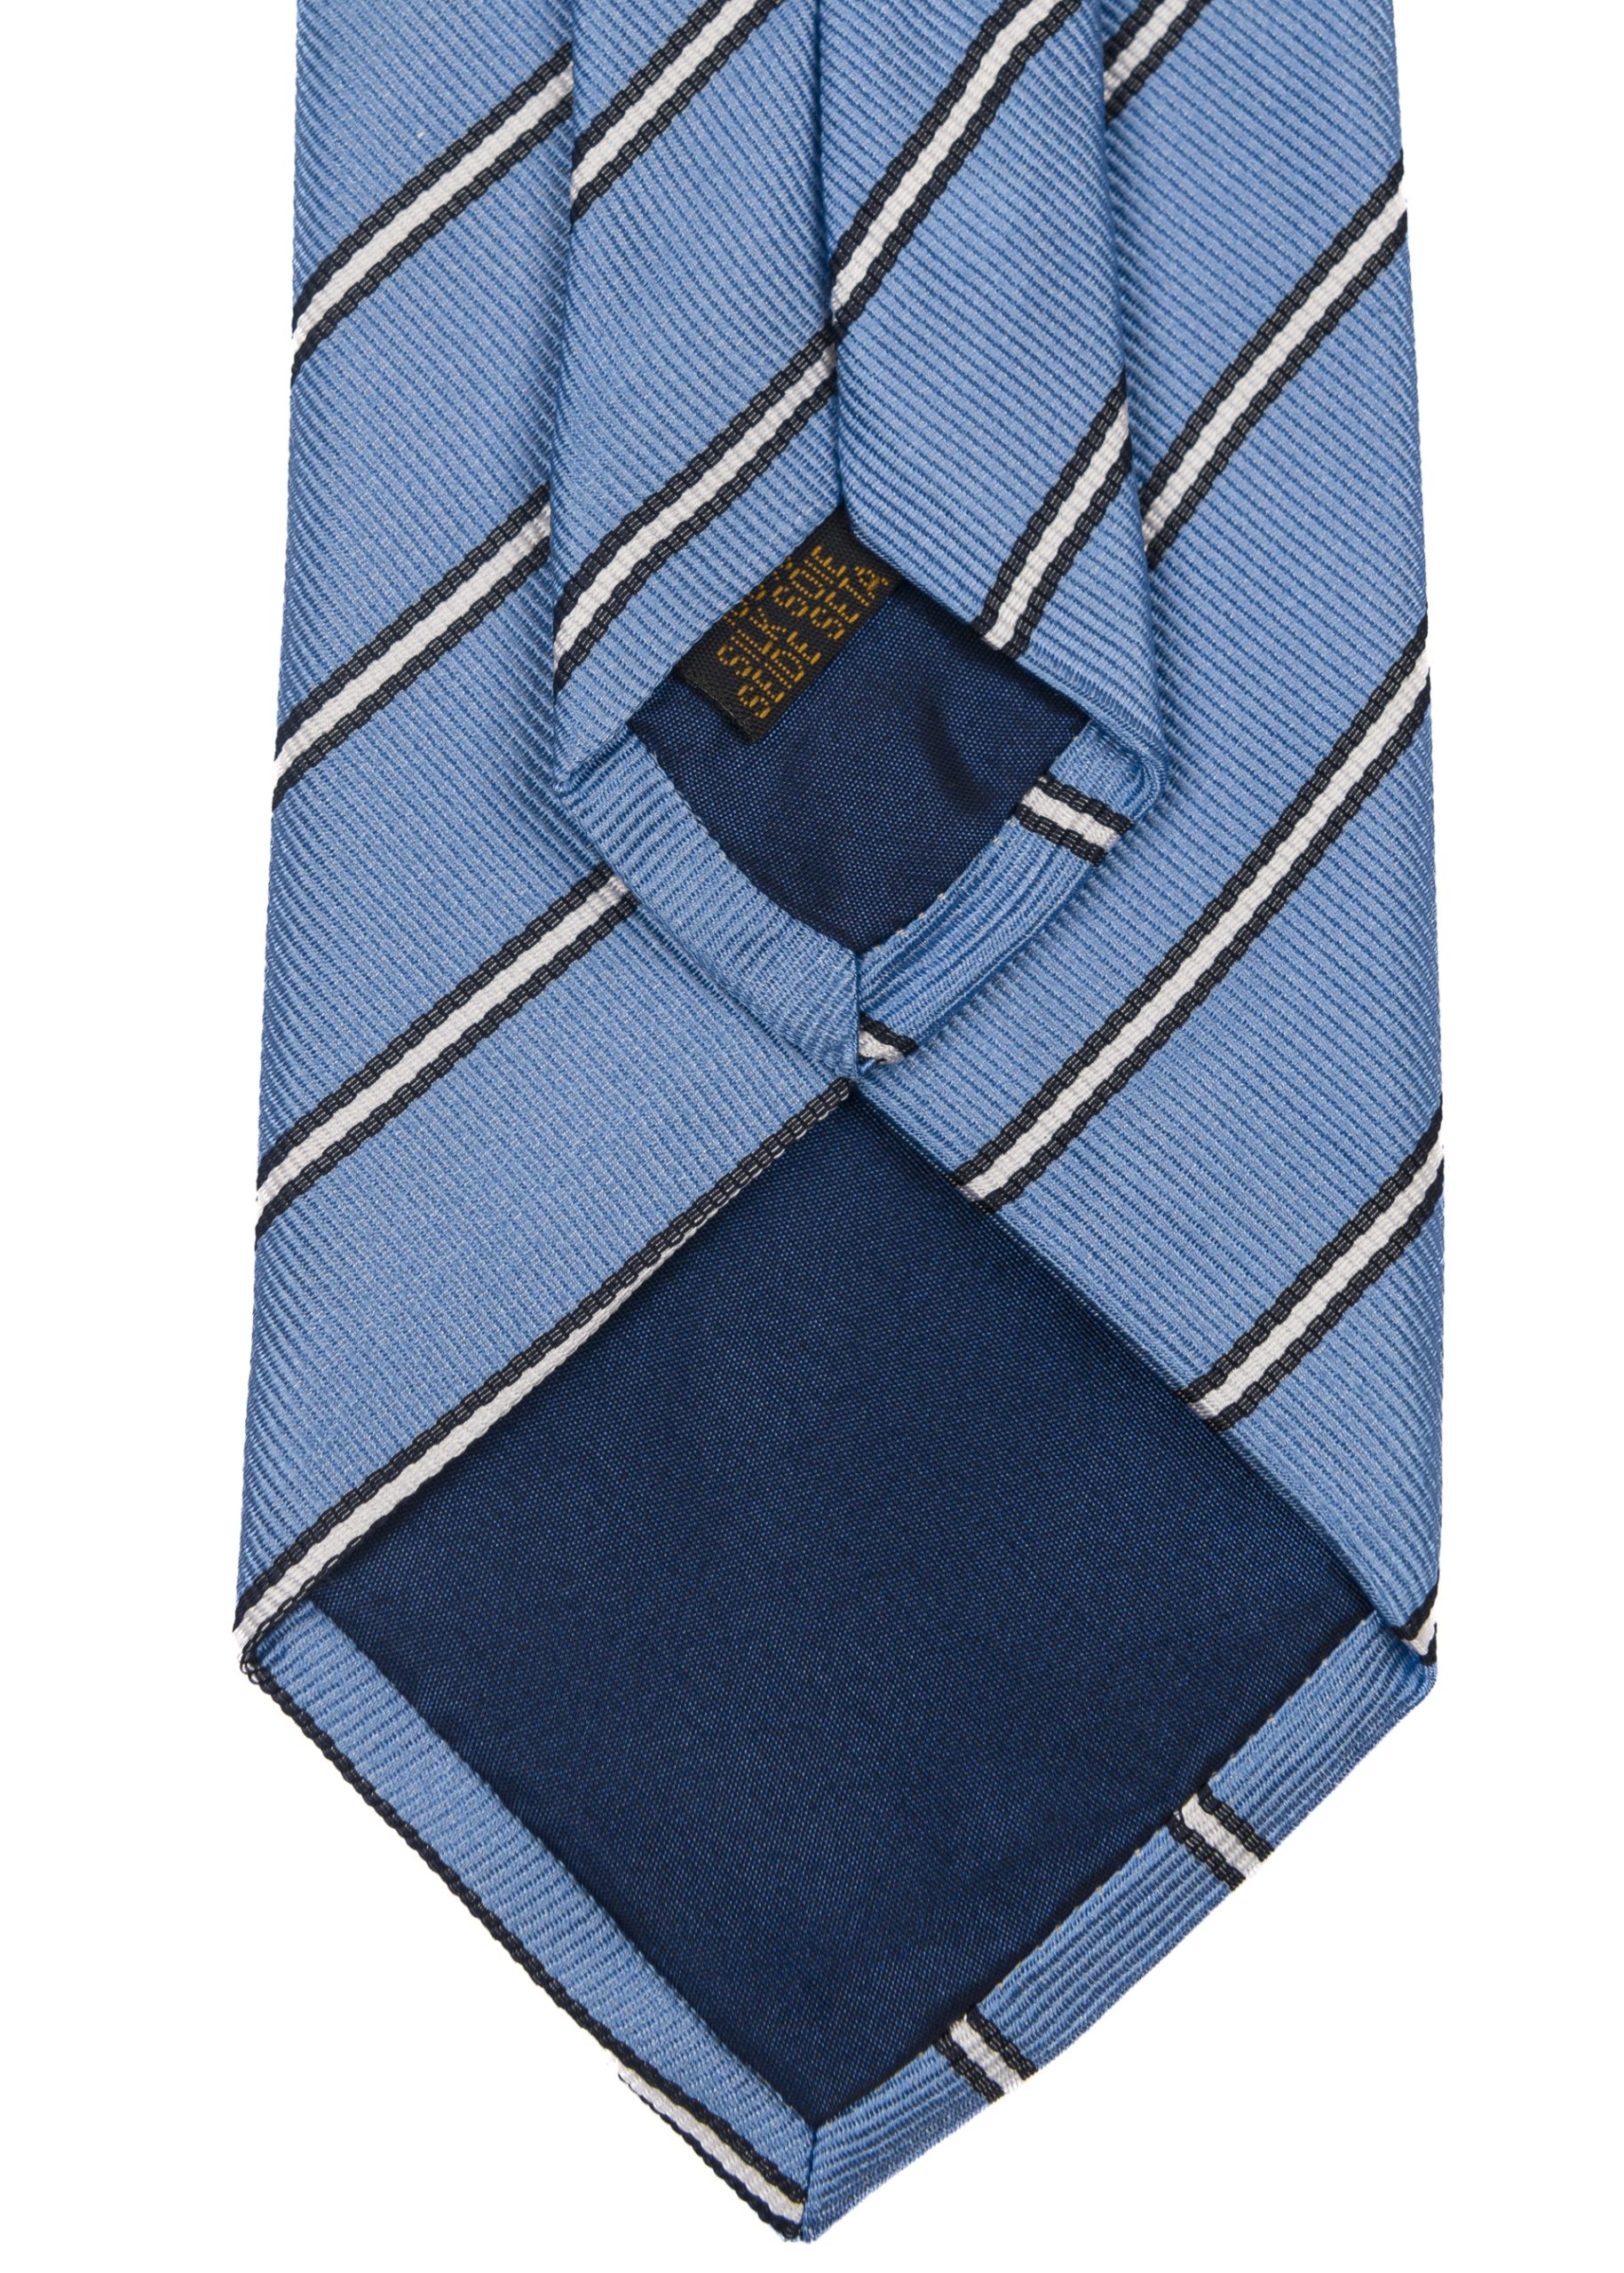 Silk tie by Roderick Charles London